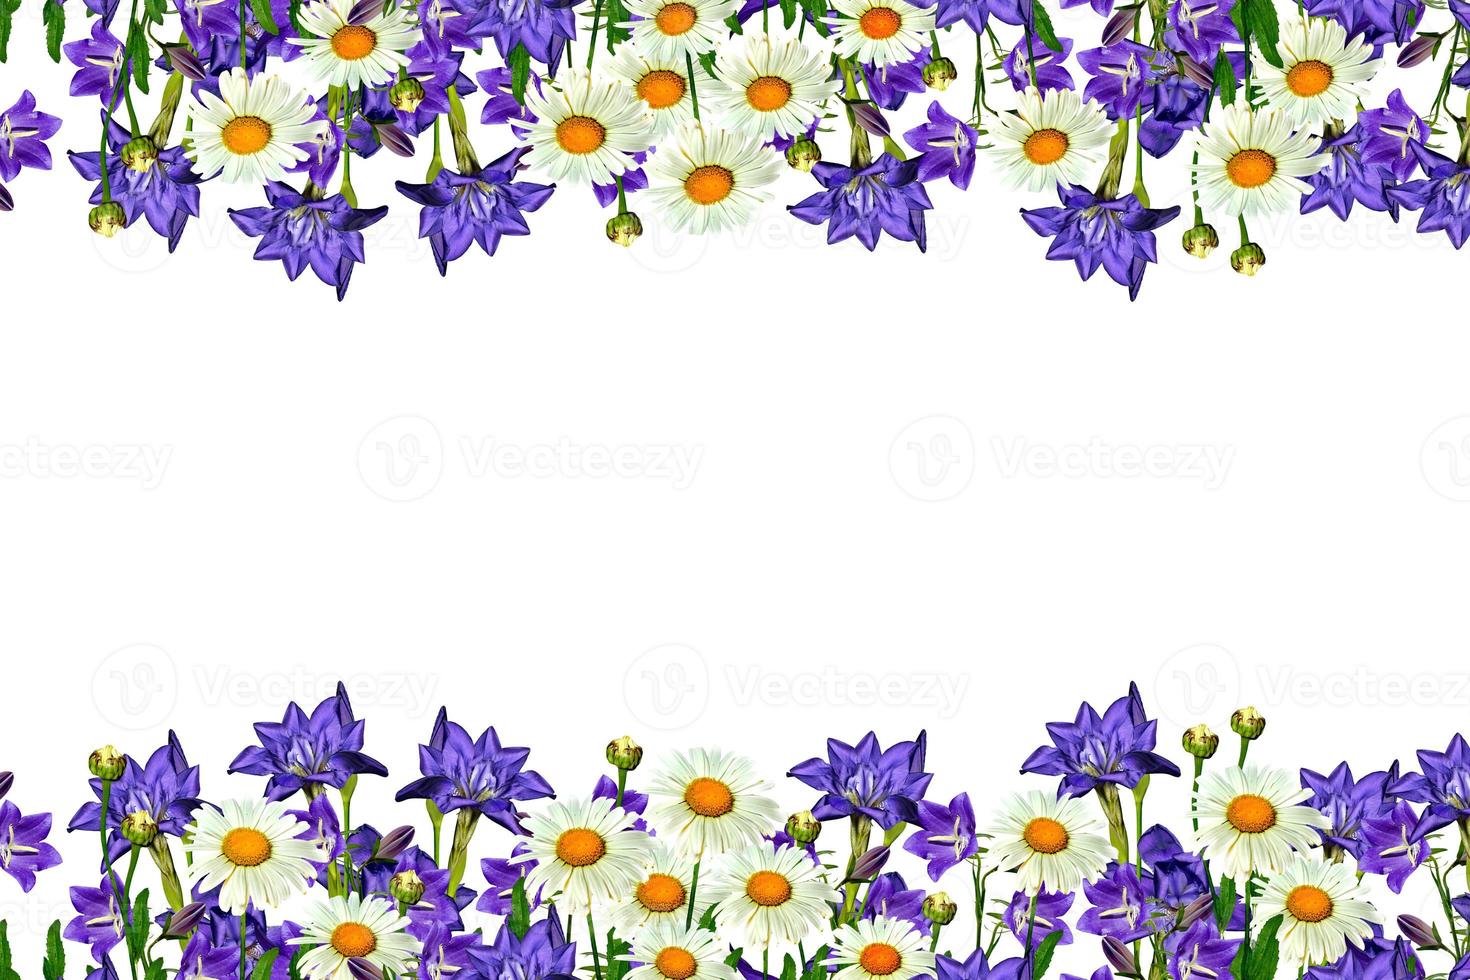 flores de margarida de campo e sinos isolados no fundo branco foto